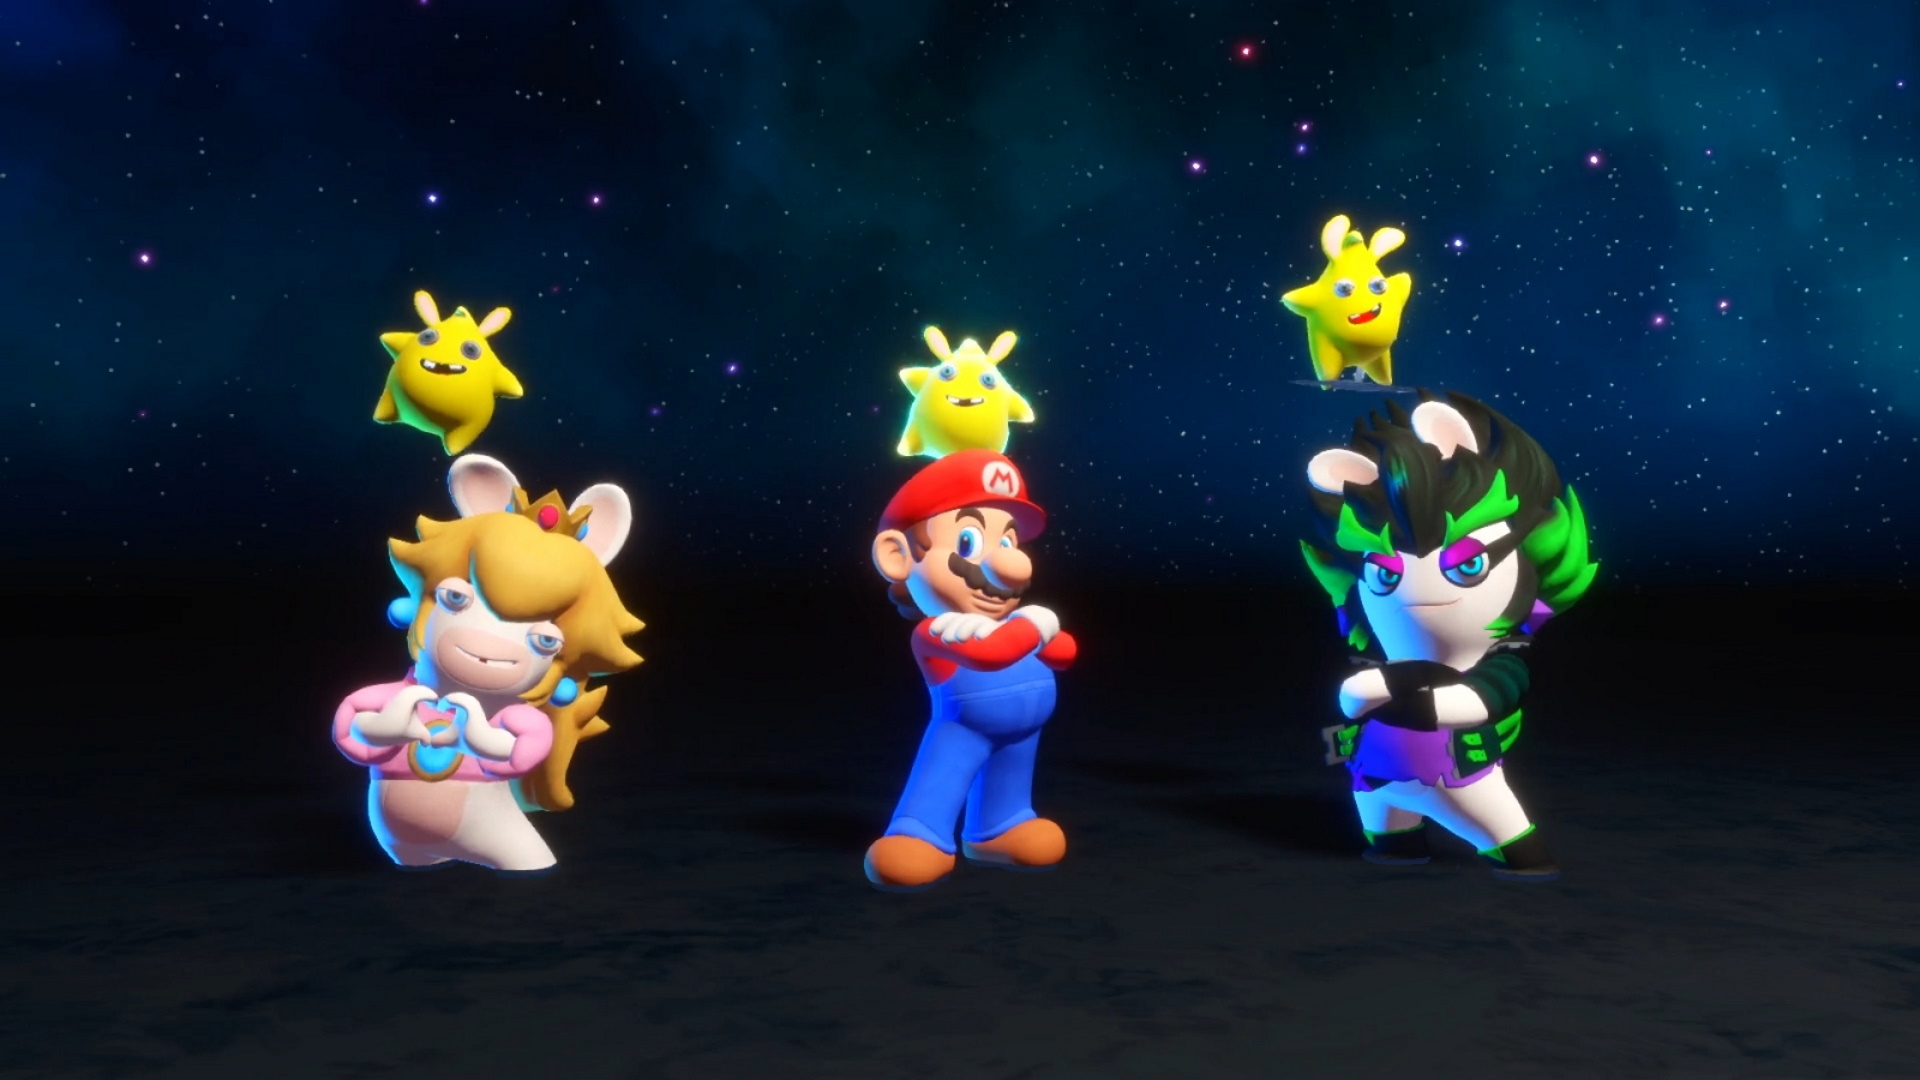 Mario + Rabbids Sparks of Hope May Hide a Super Mario Galaxy 3 Teaser